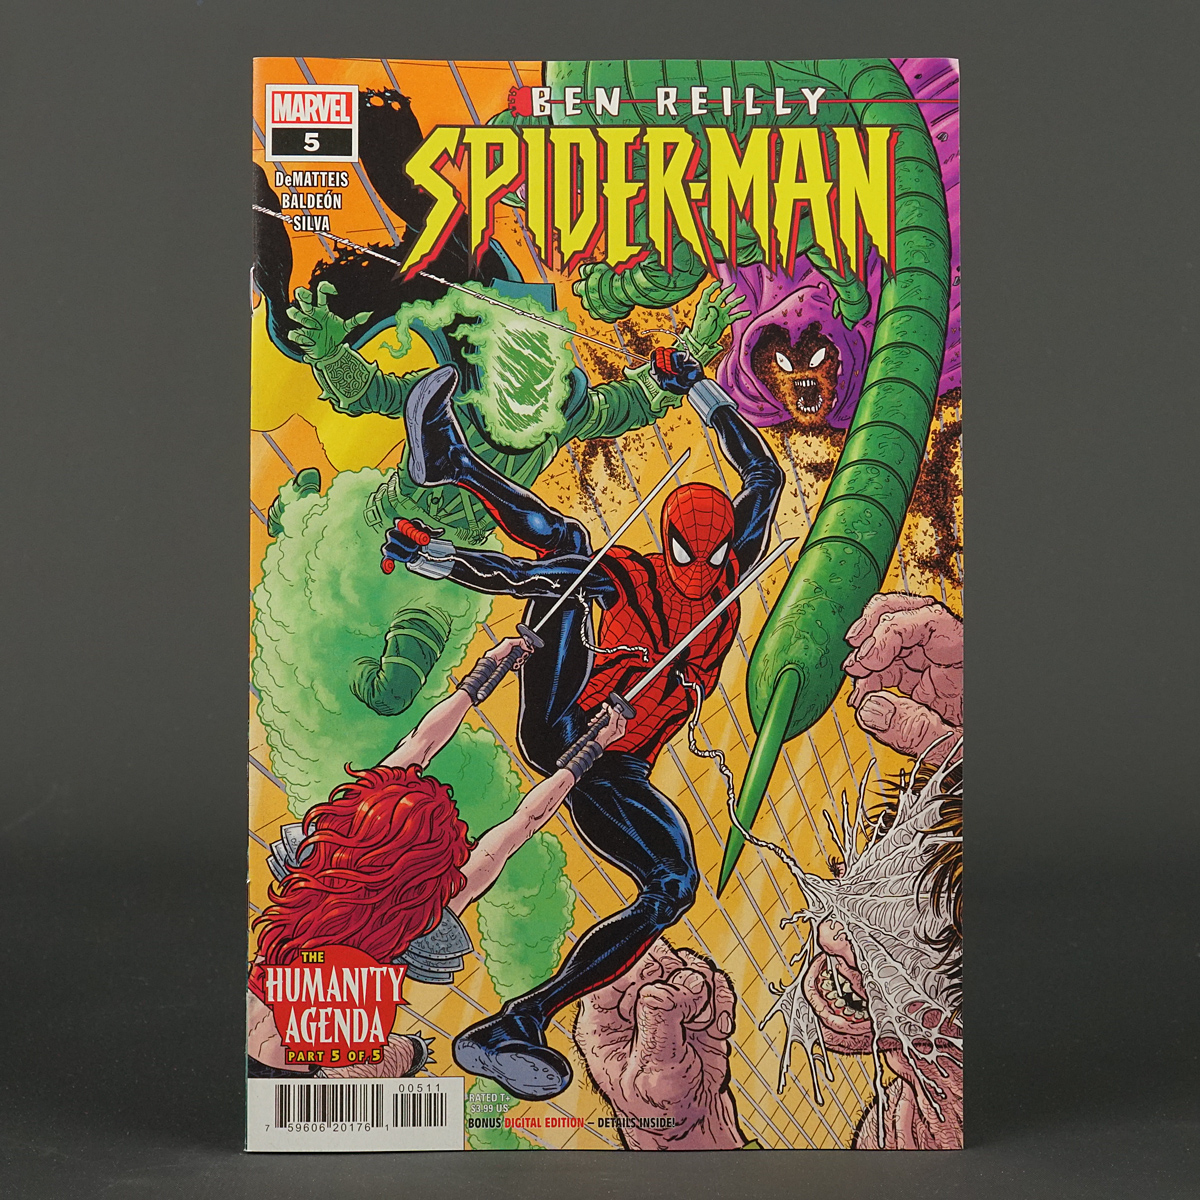 BEN REILLY SPIDER-MAN #5 Marvel Comics 2022 MAR220961 (CA) Skroce (W) Dematteis